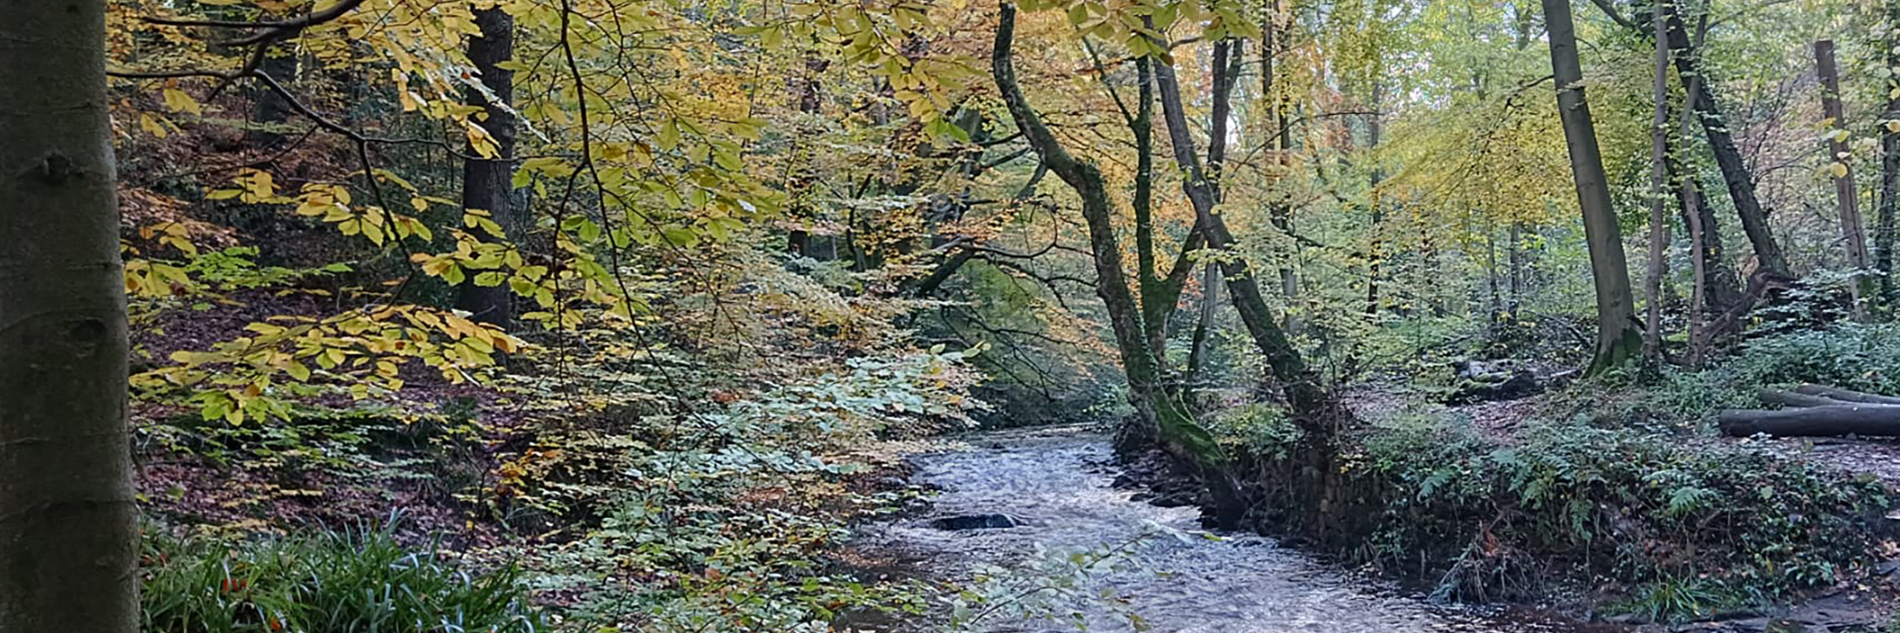 A stream running through a woodland area.